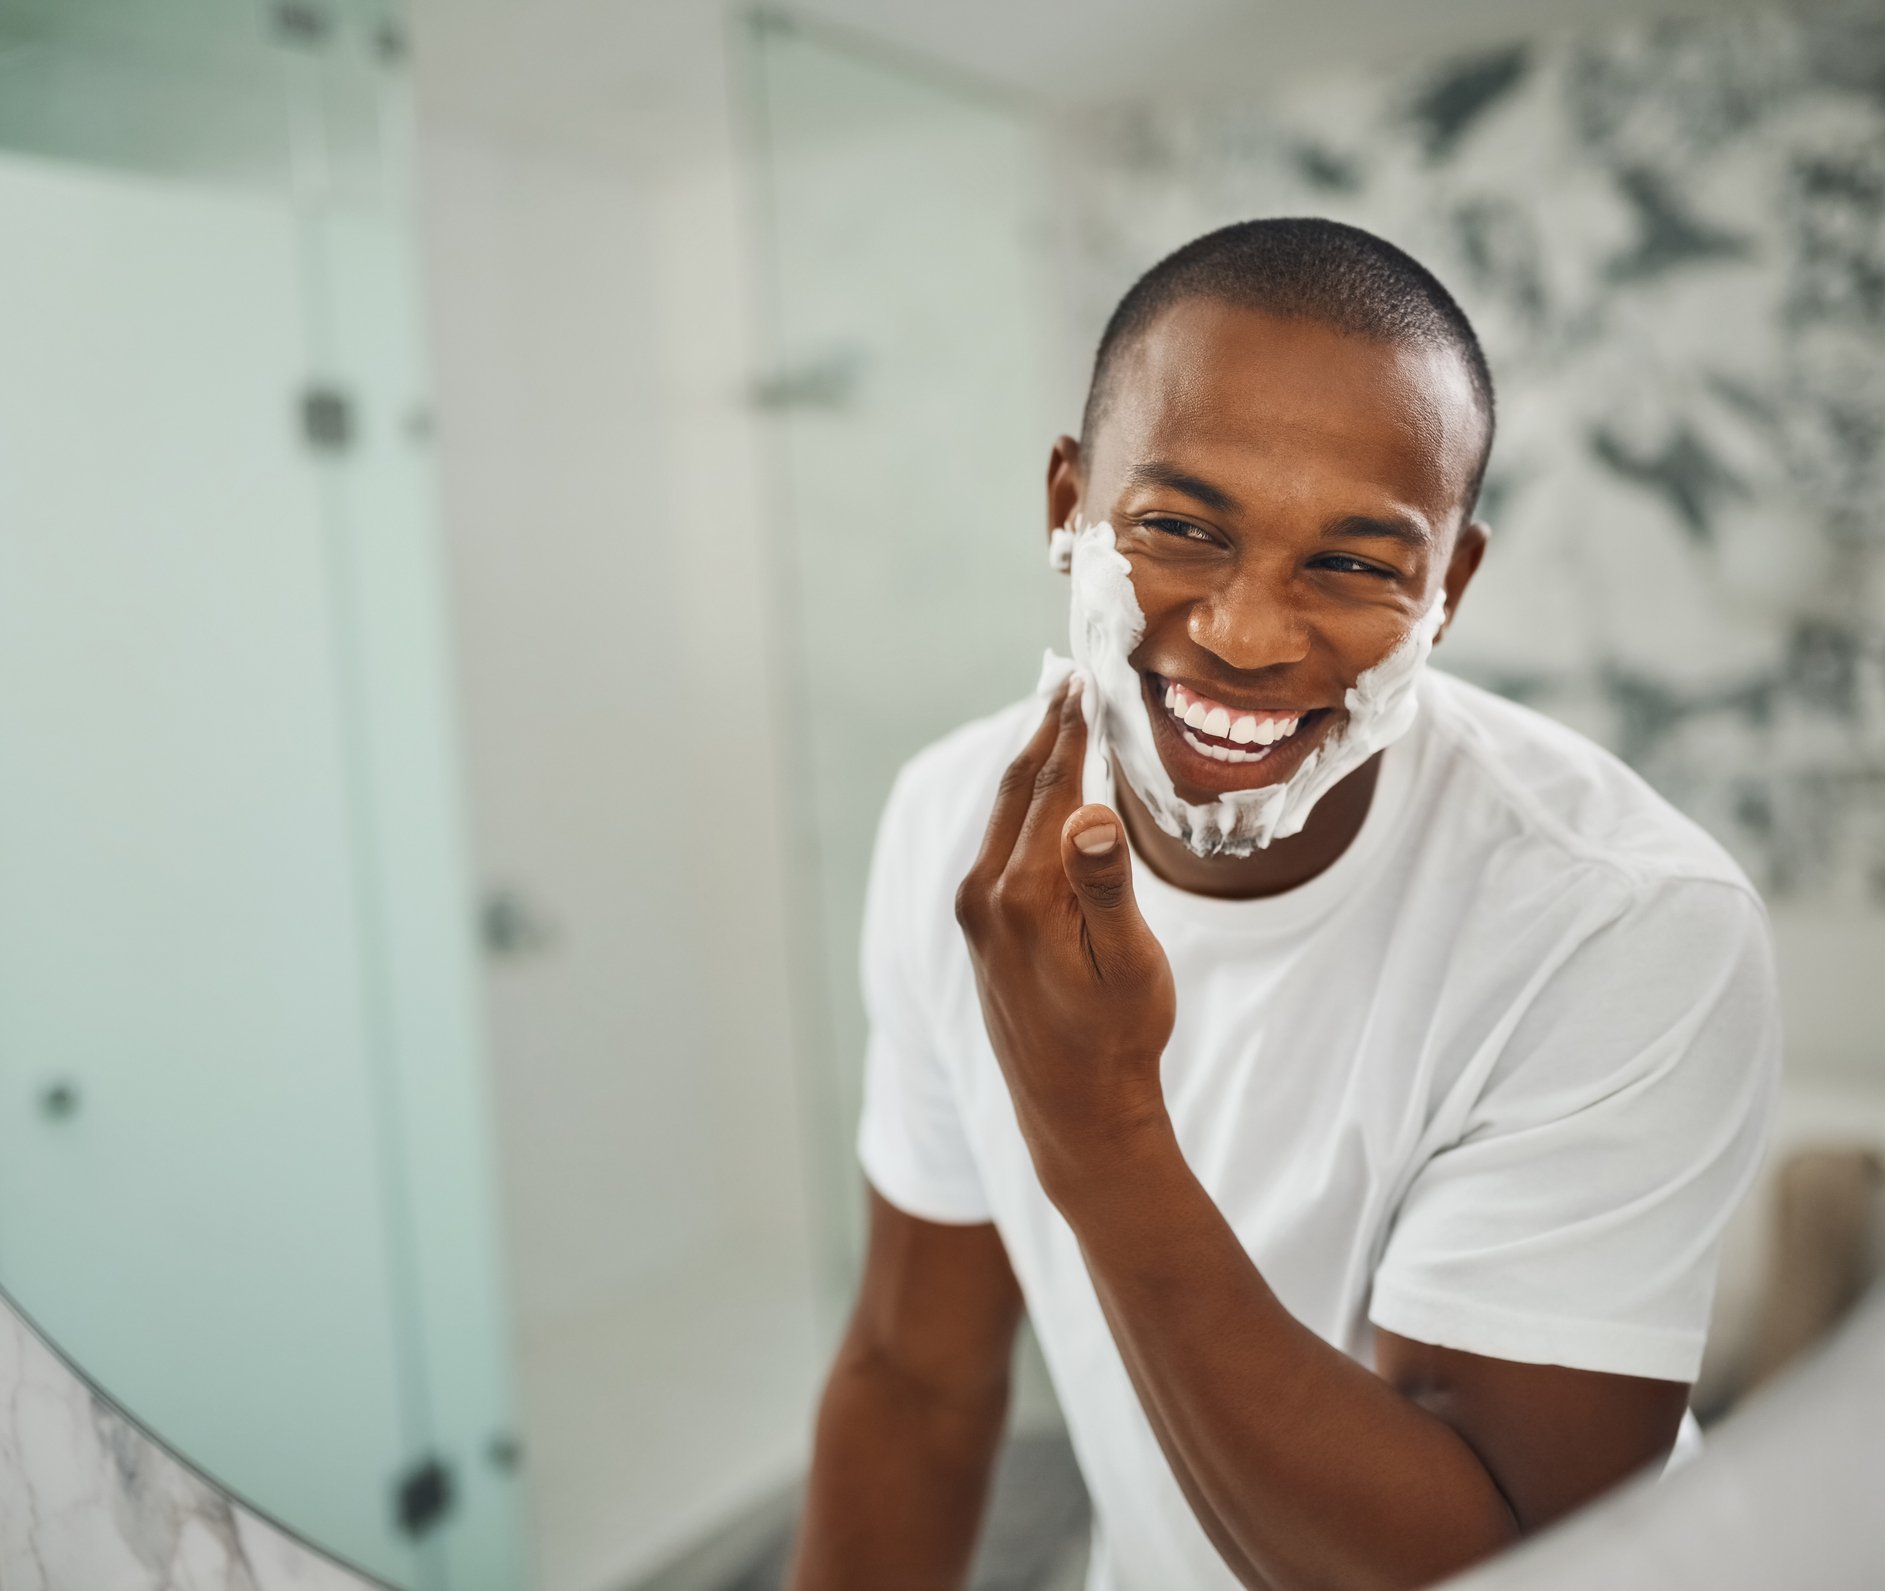 Man applying Perricone MD CBD sensitive skin shaving cream to his face in the mirror